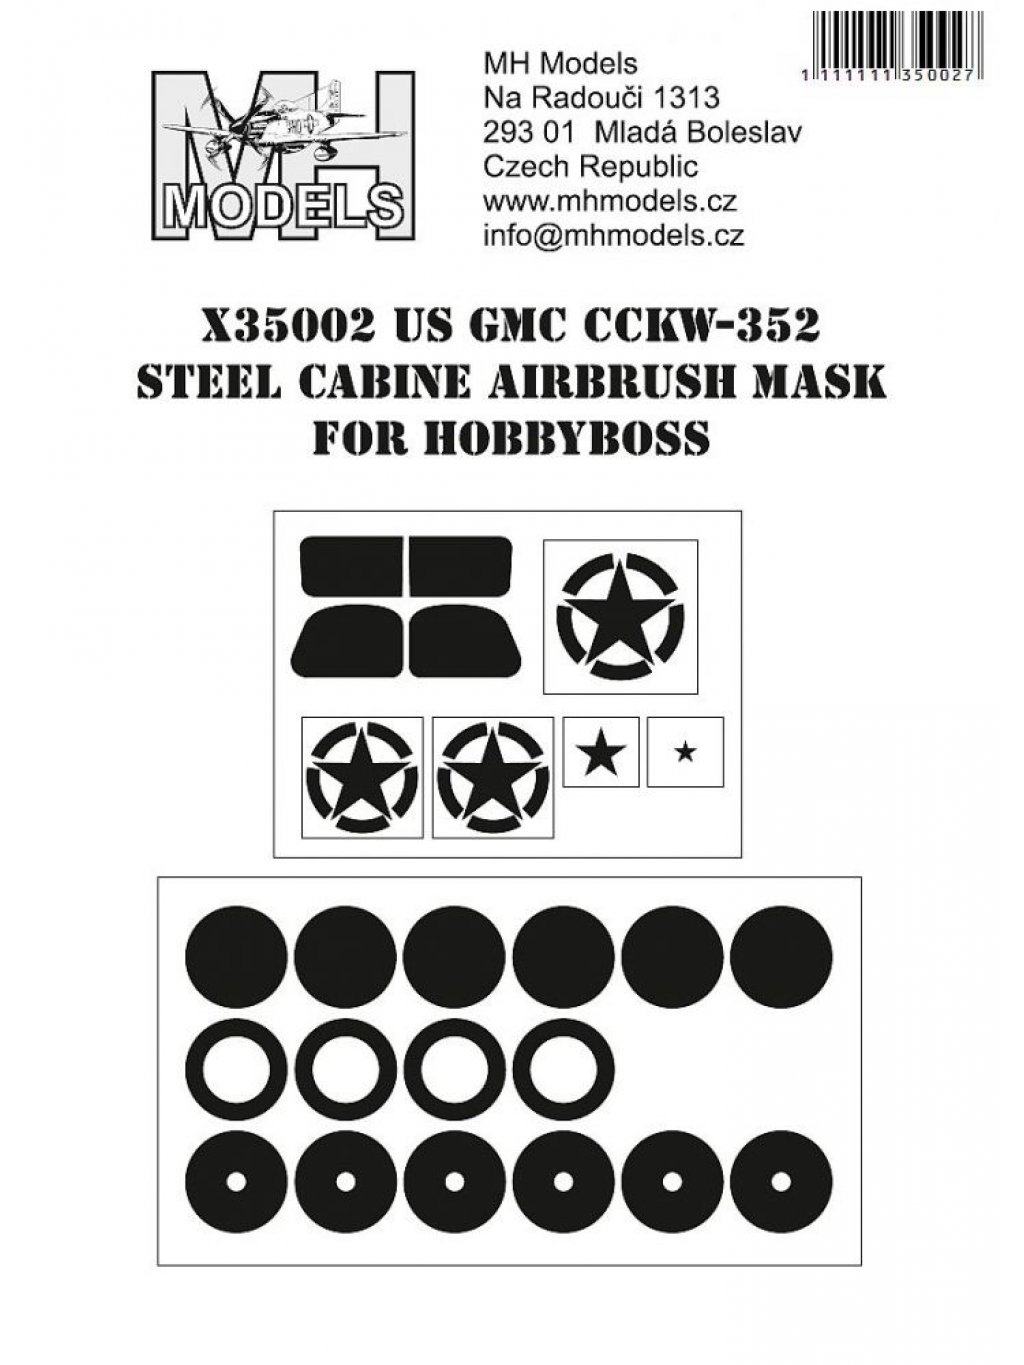 US GMC CCKW-352 Steel cabine airbrush mask for Hobbyboss